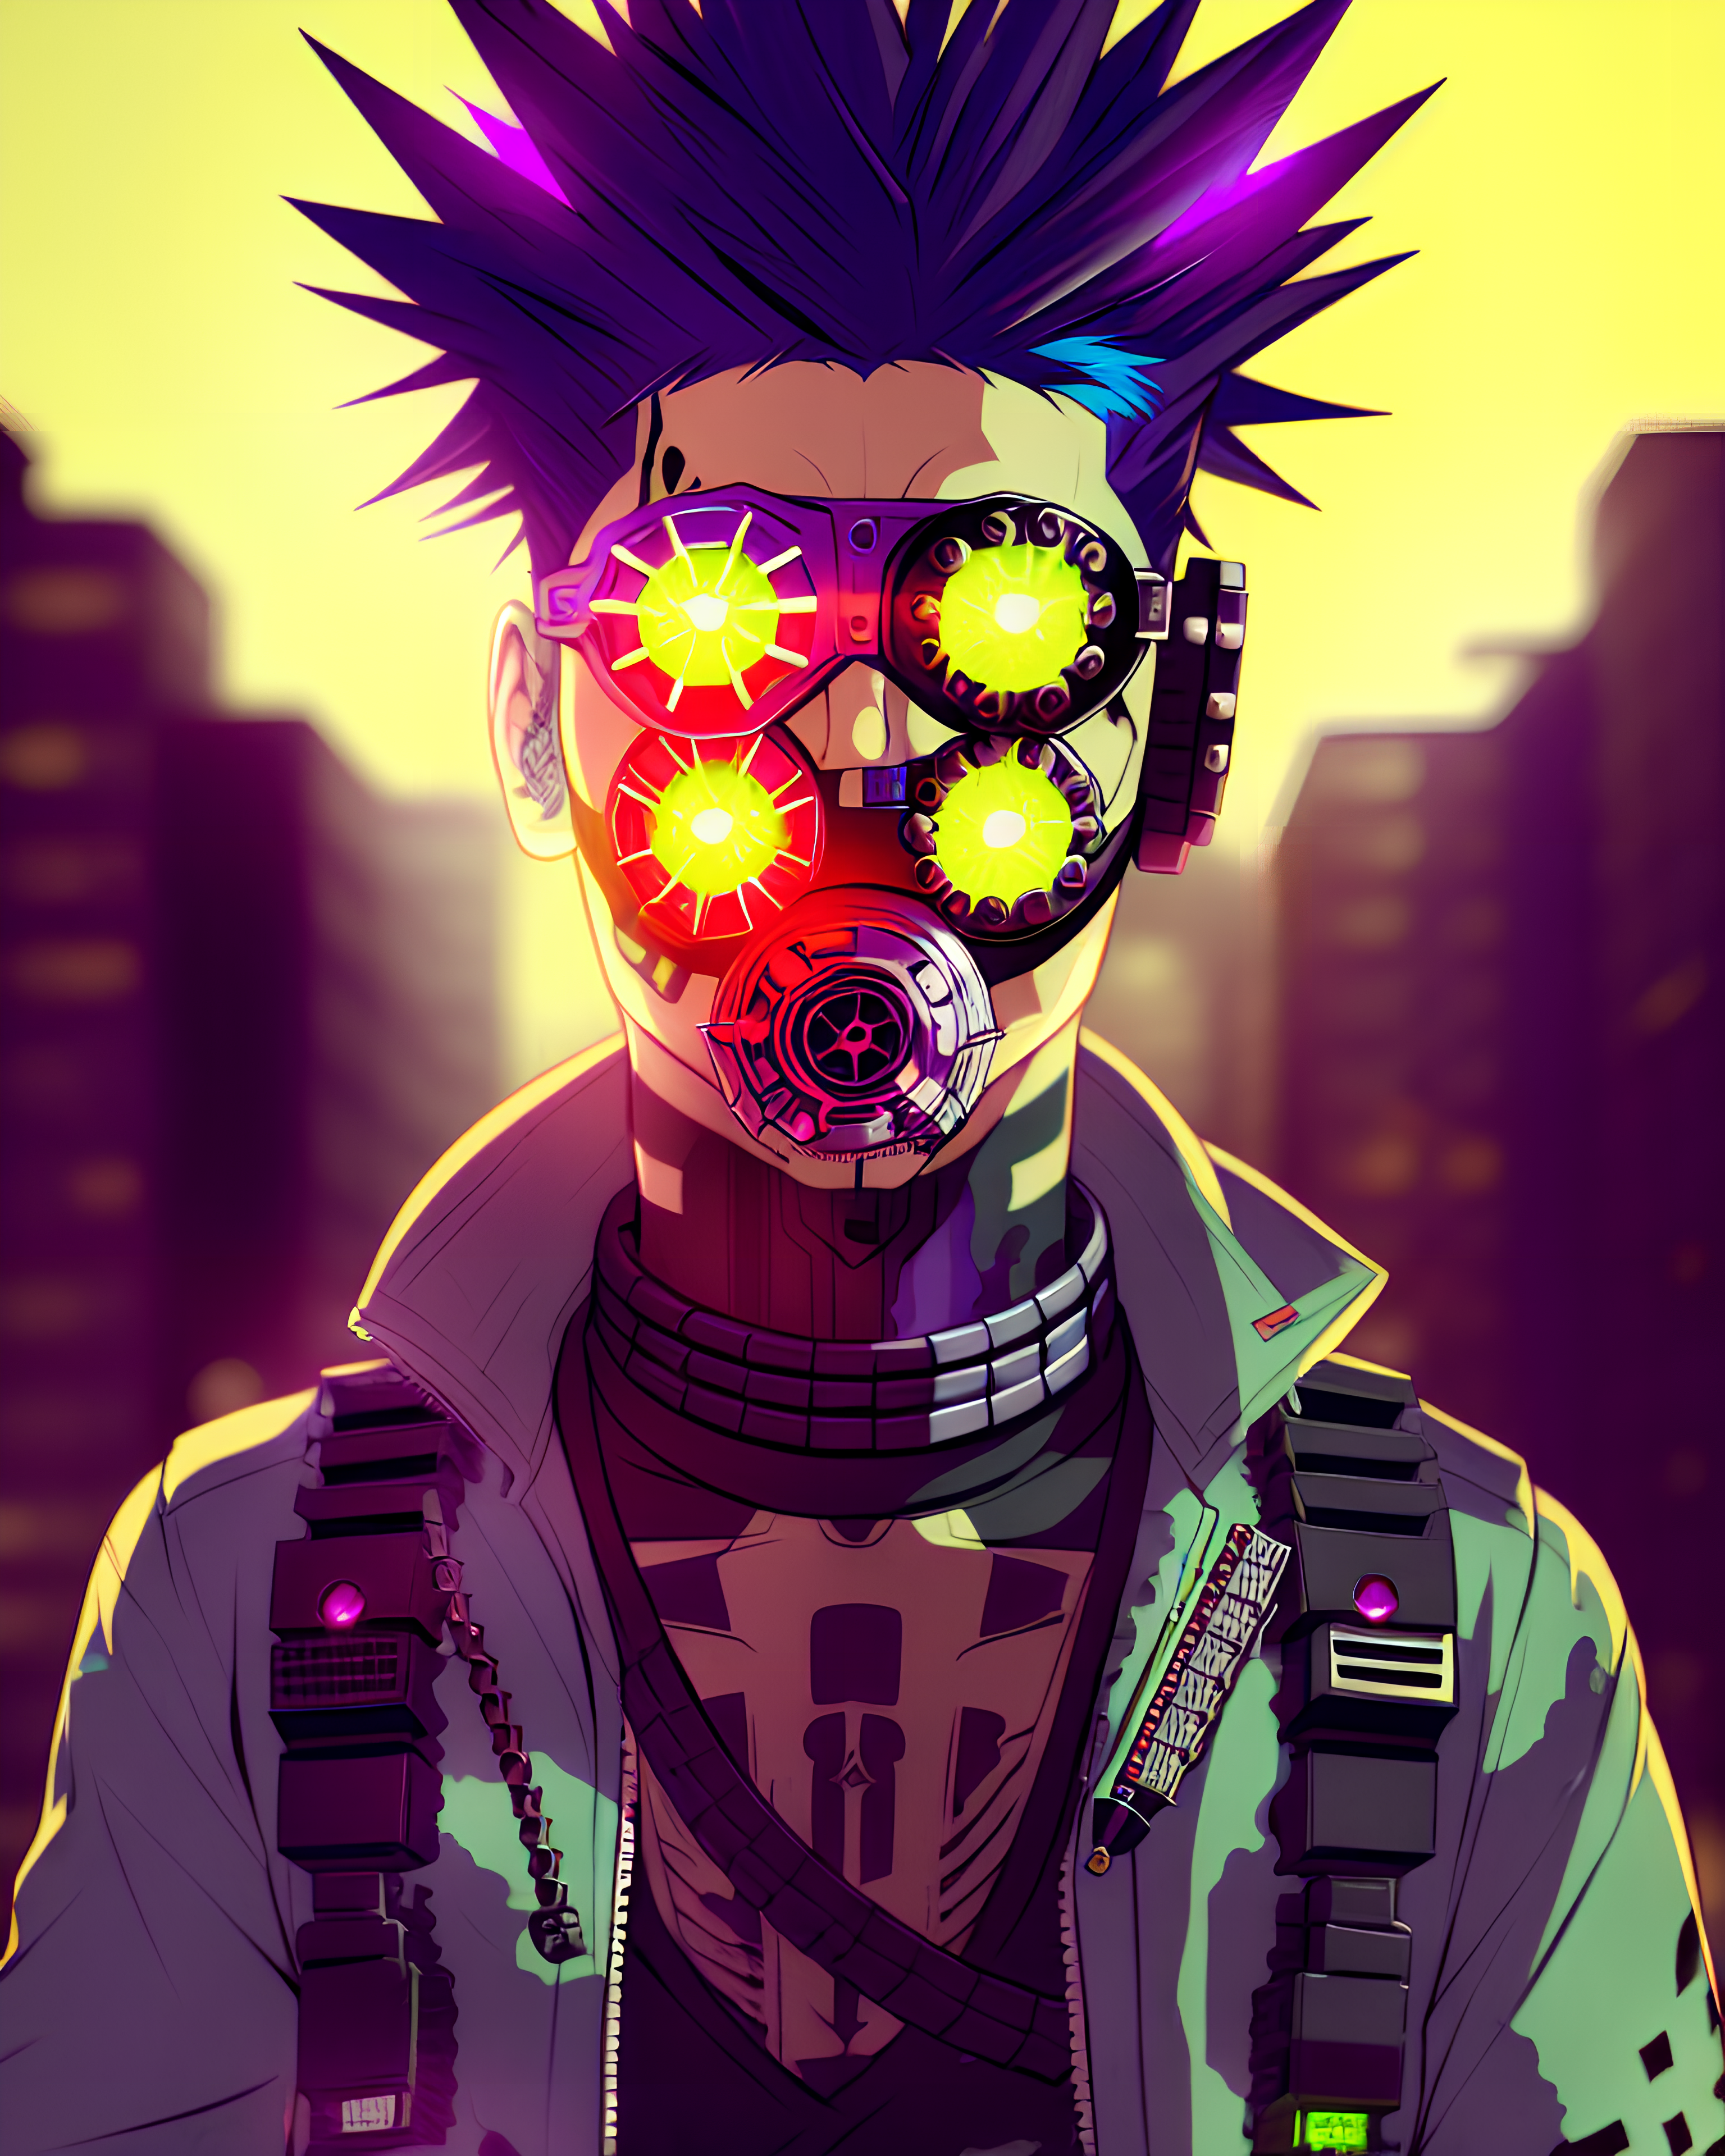 ANIME Cyberpunk Boy (4) by PunkerLazar on DeviantArt